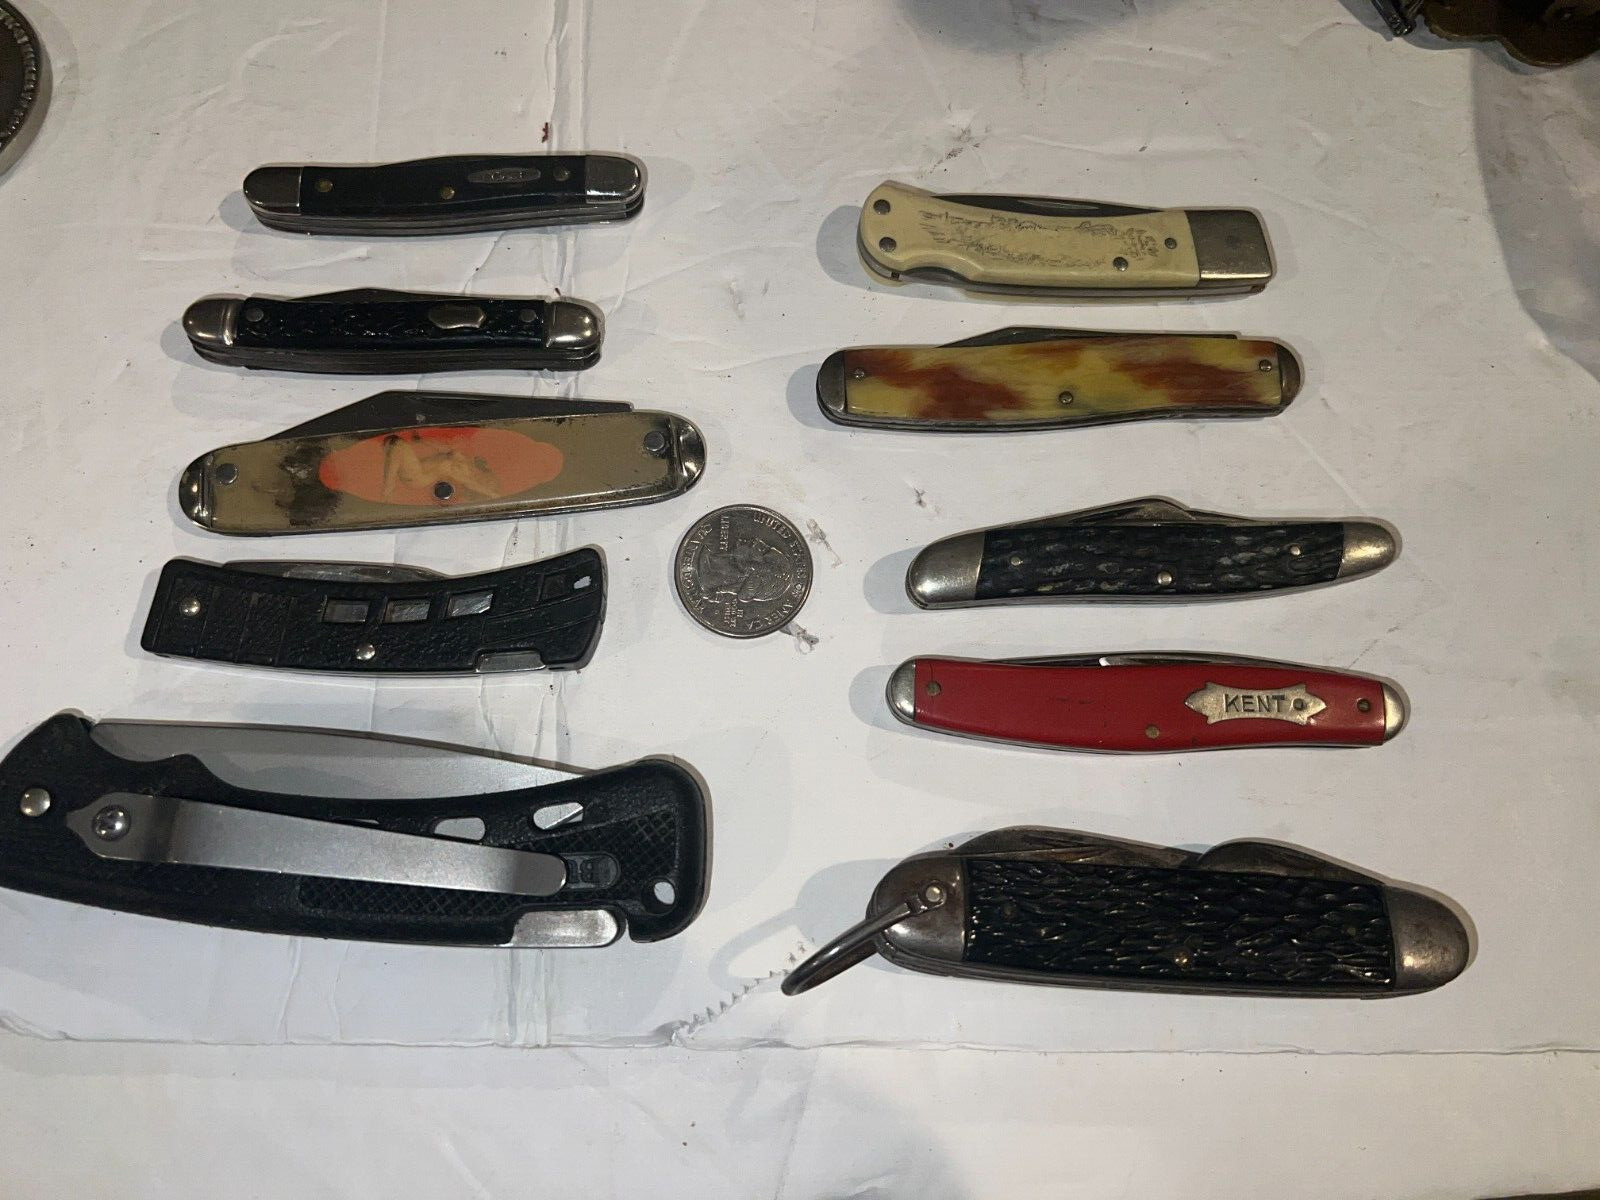 Lot of 10 folding pocketknives - all made in USA